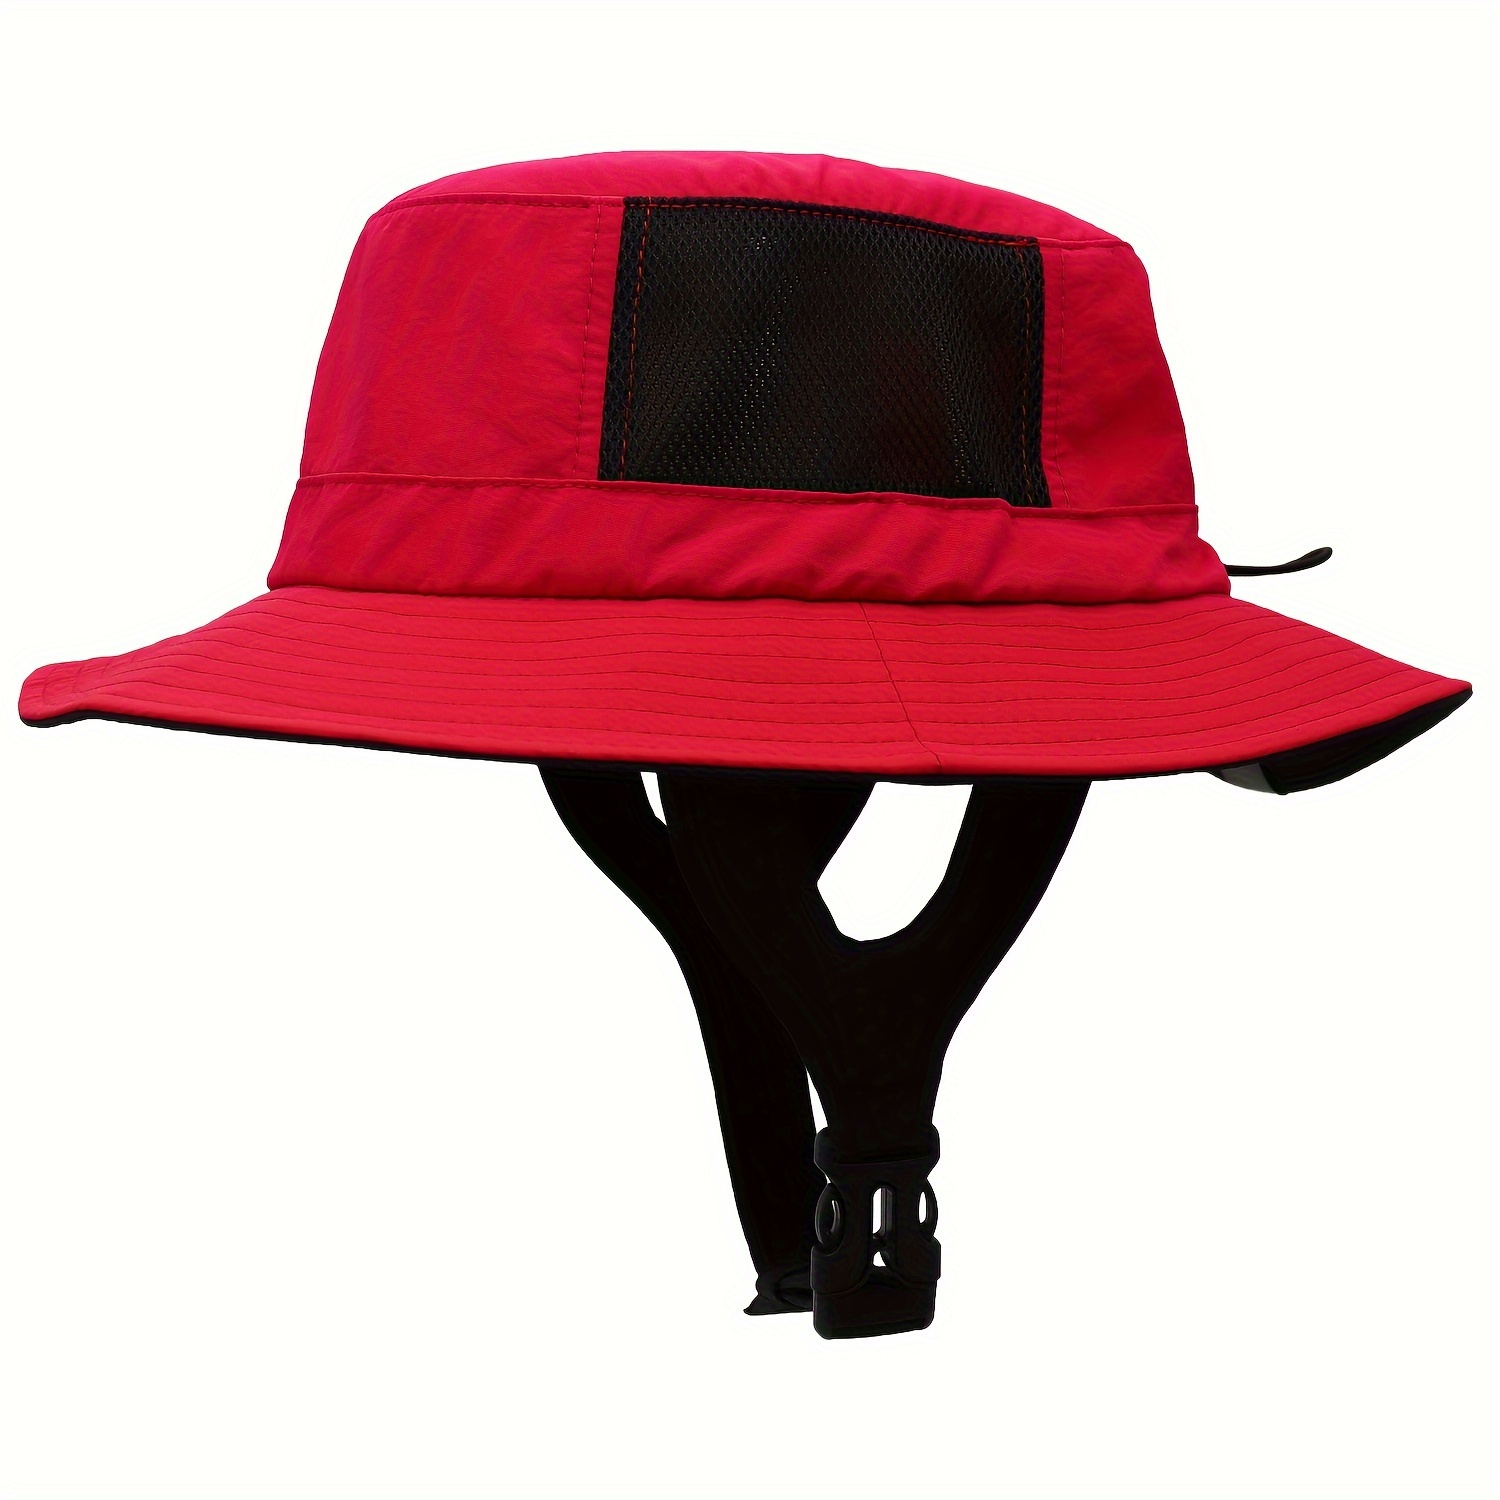  Red Bucket Hats for Men Men and Women Casual Summer Printed  Outdoor Flat Top Sunshade Surfing Hats for Men : ביגוד, נעליים ותכשיטים